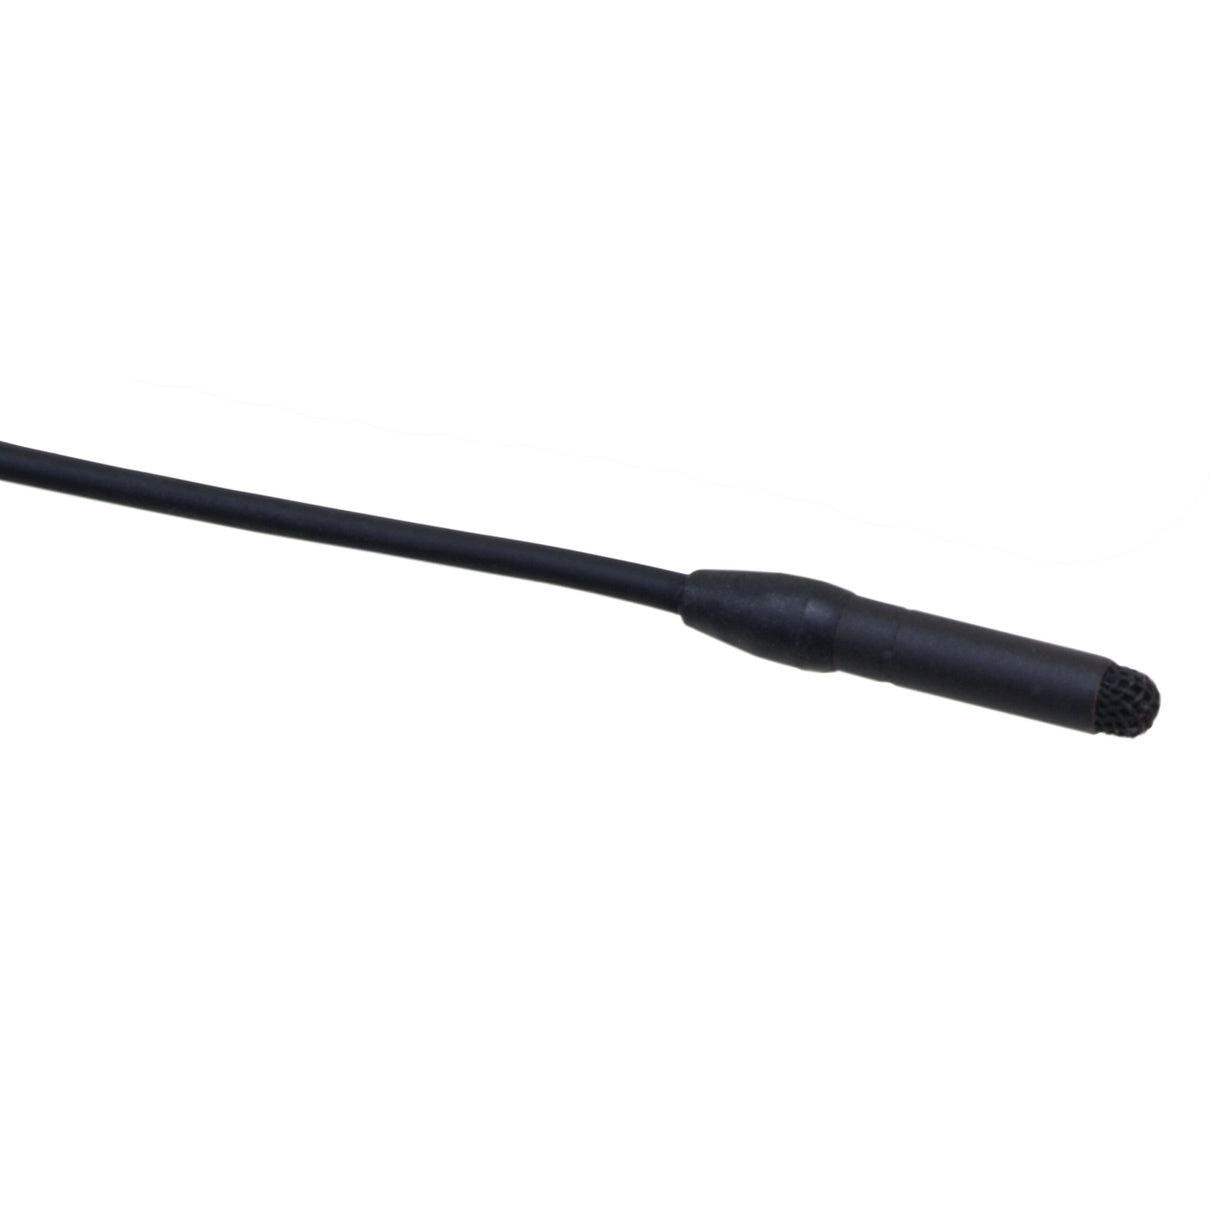 Sanken COS-11D-PT-AL-1.8-BK Omnidirectional Lavalier Microphone without Accessories, Black, Pigtail, Normal Sensitivity, 1.8m Stripped Cable